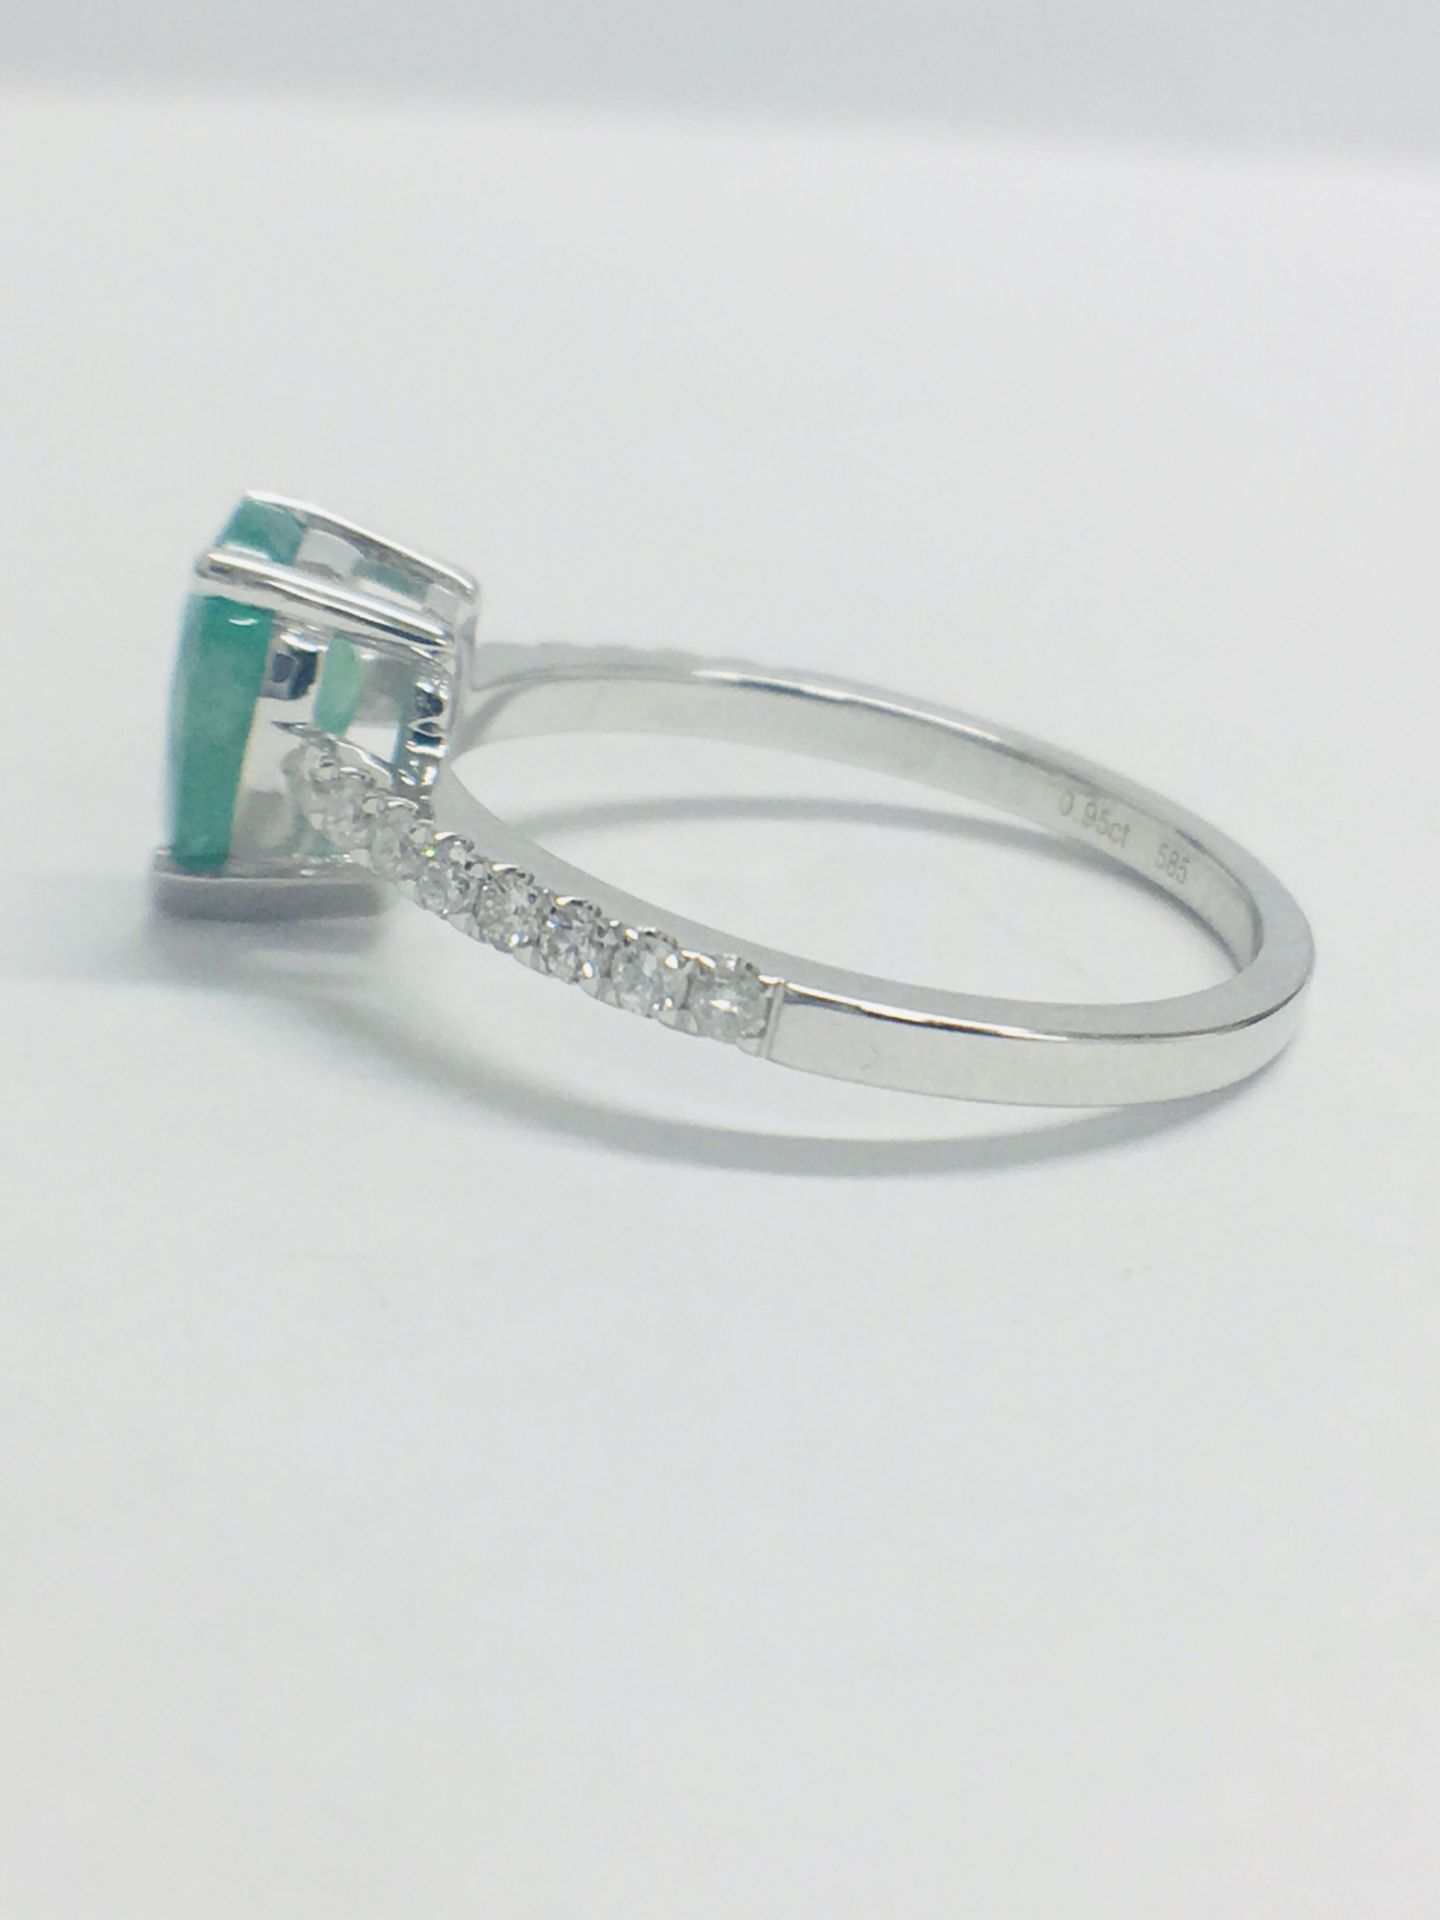 14ct White Gold Emerald & Diamond Ring - Image 3 of 10